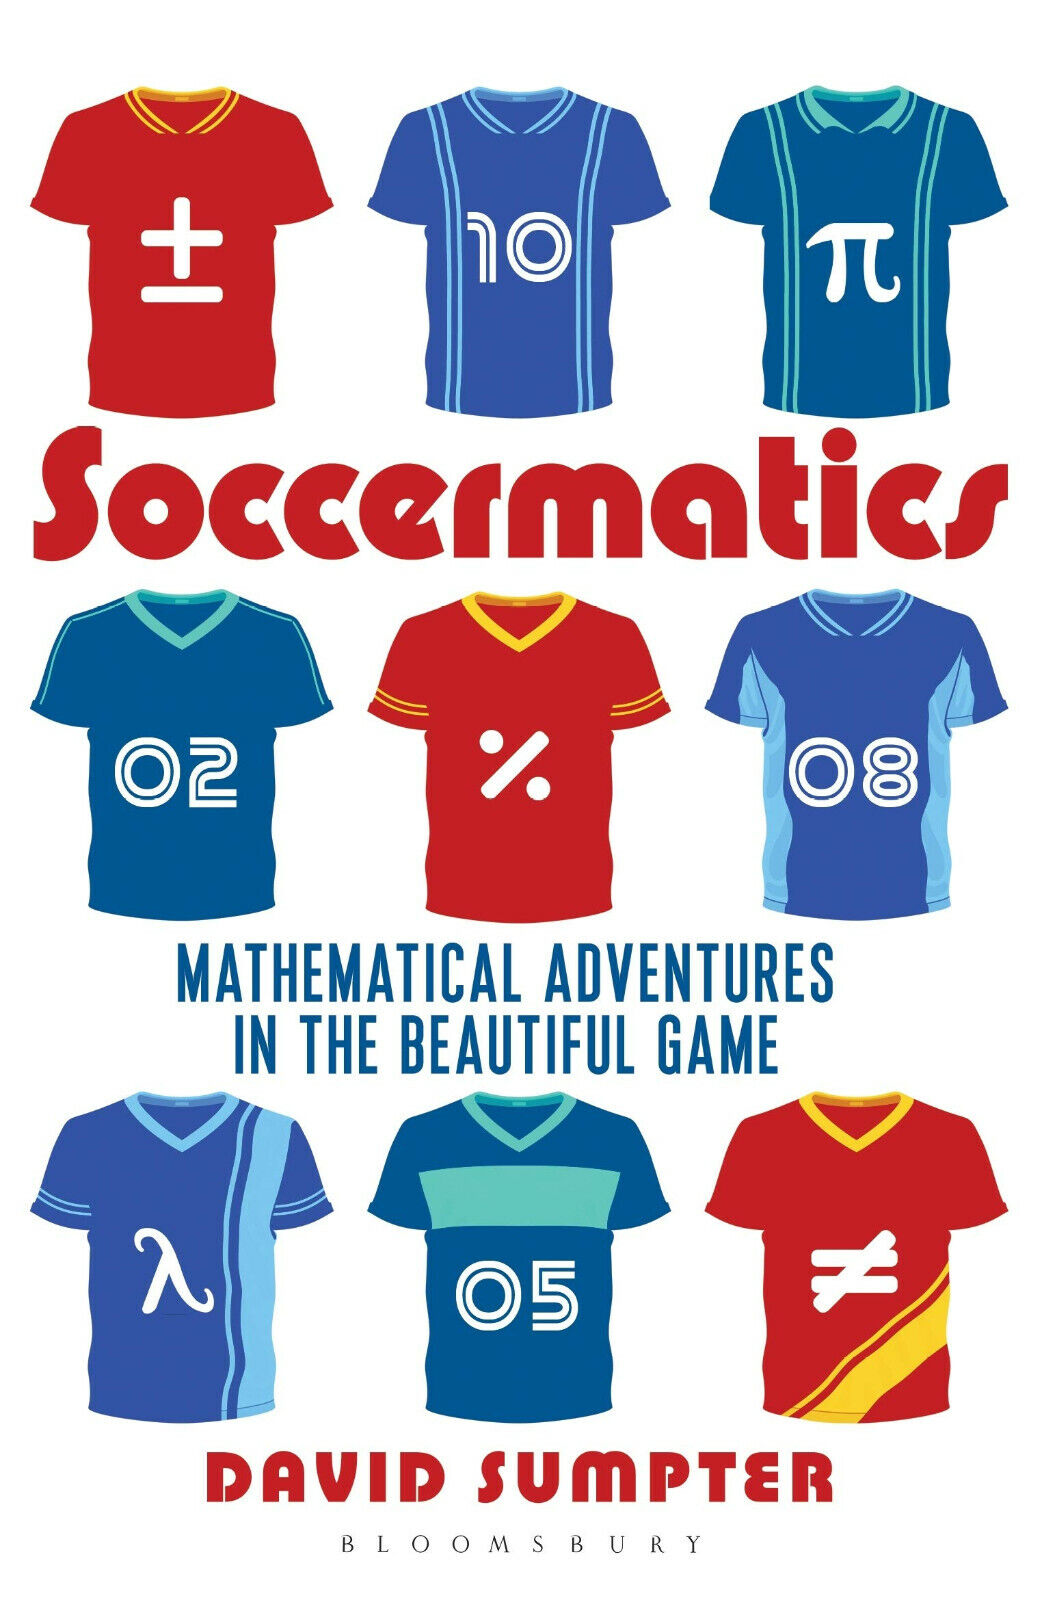 Soccermatics: Mathematical Adventures in the Beautiful Game Pro-Edition - 2017 libro usato